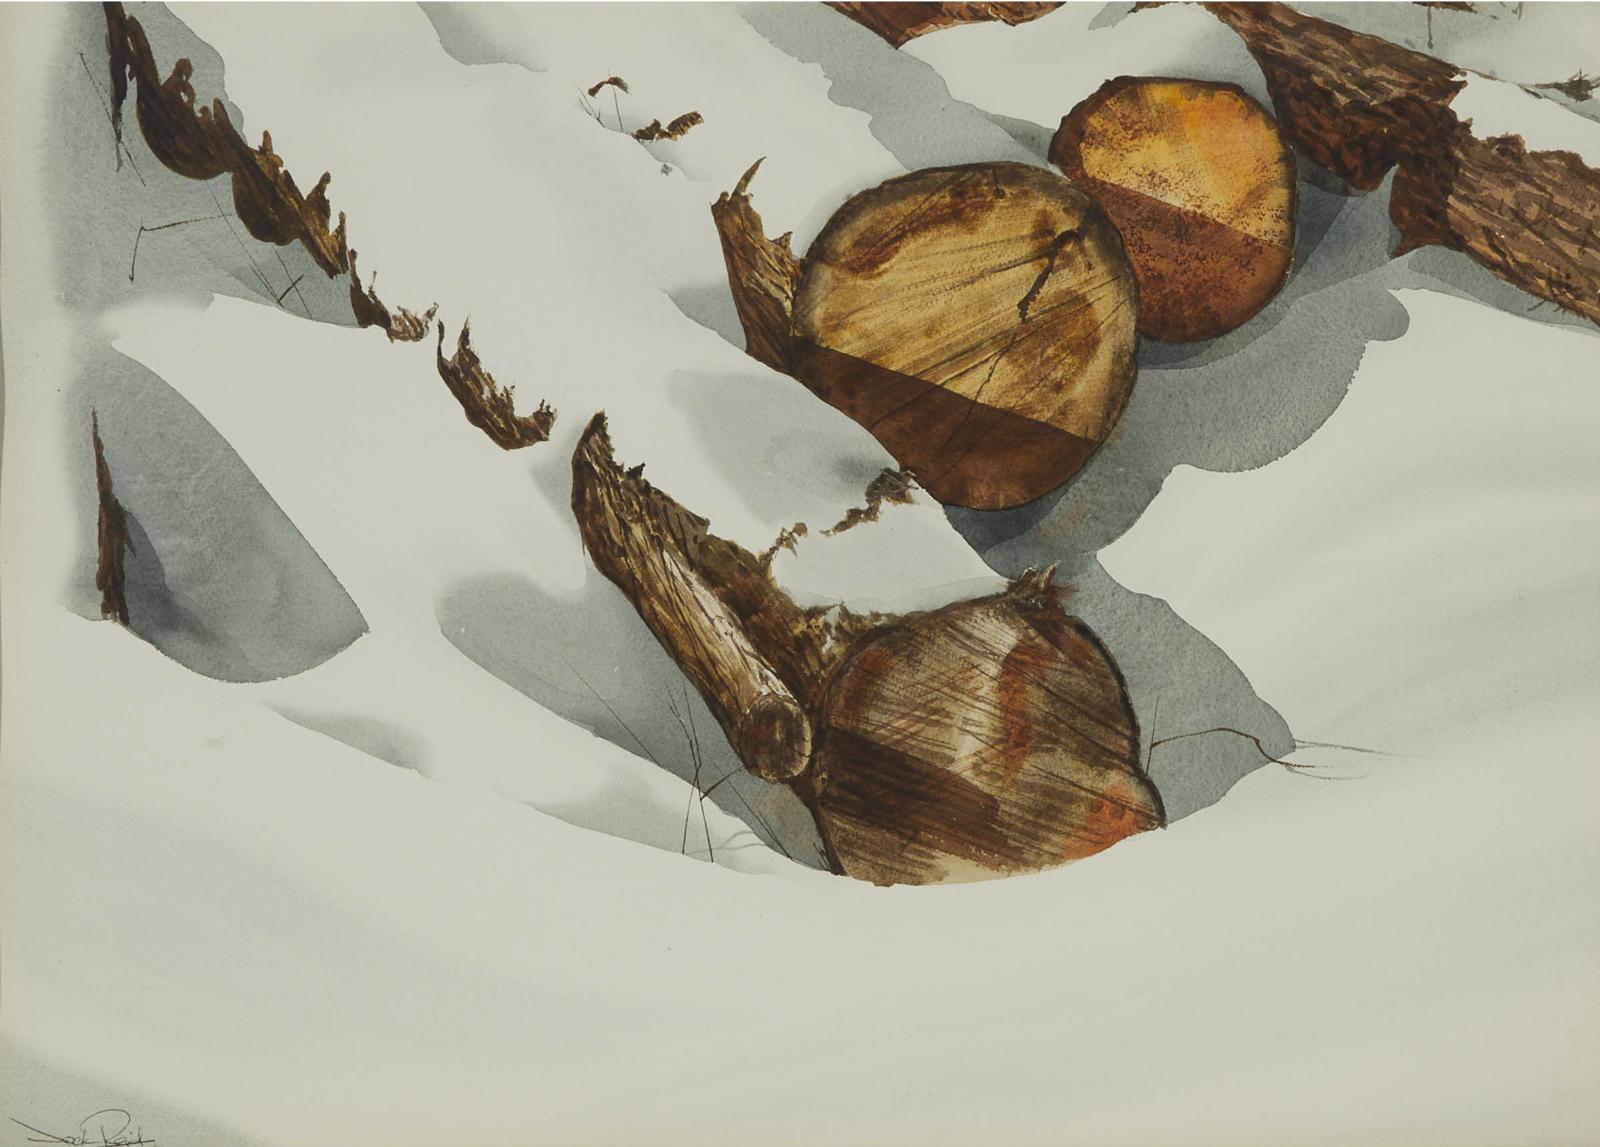 Jack Henry Reid (1925-2009) - Snow Covered Logs